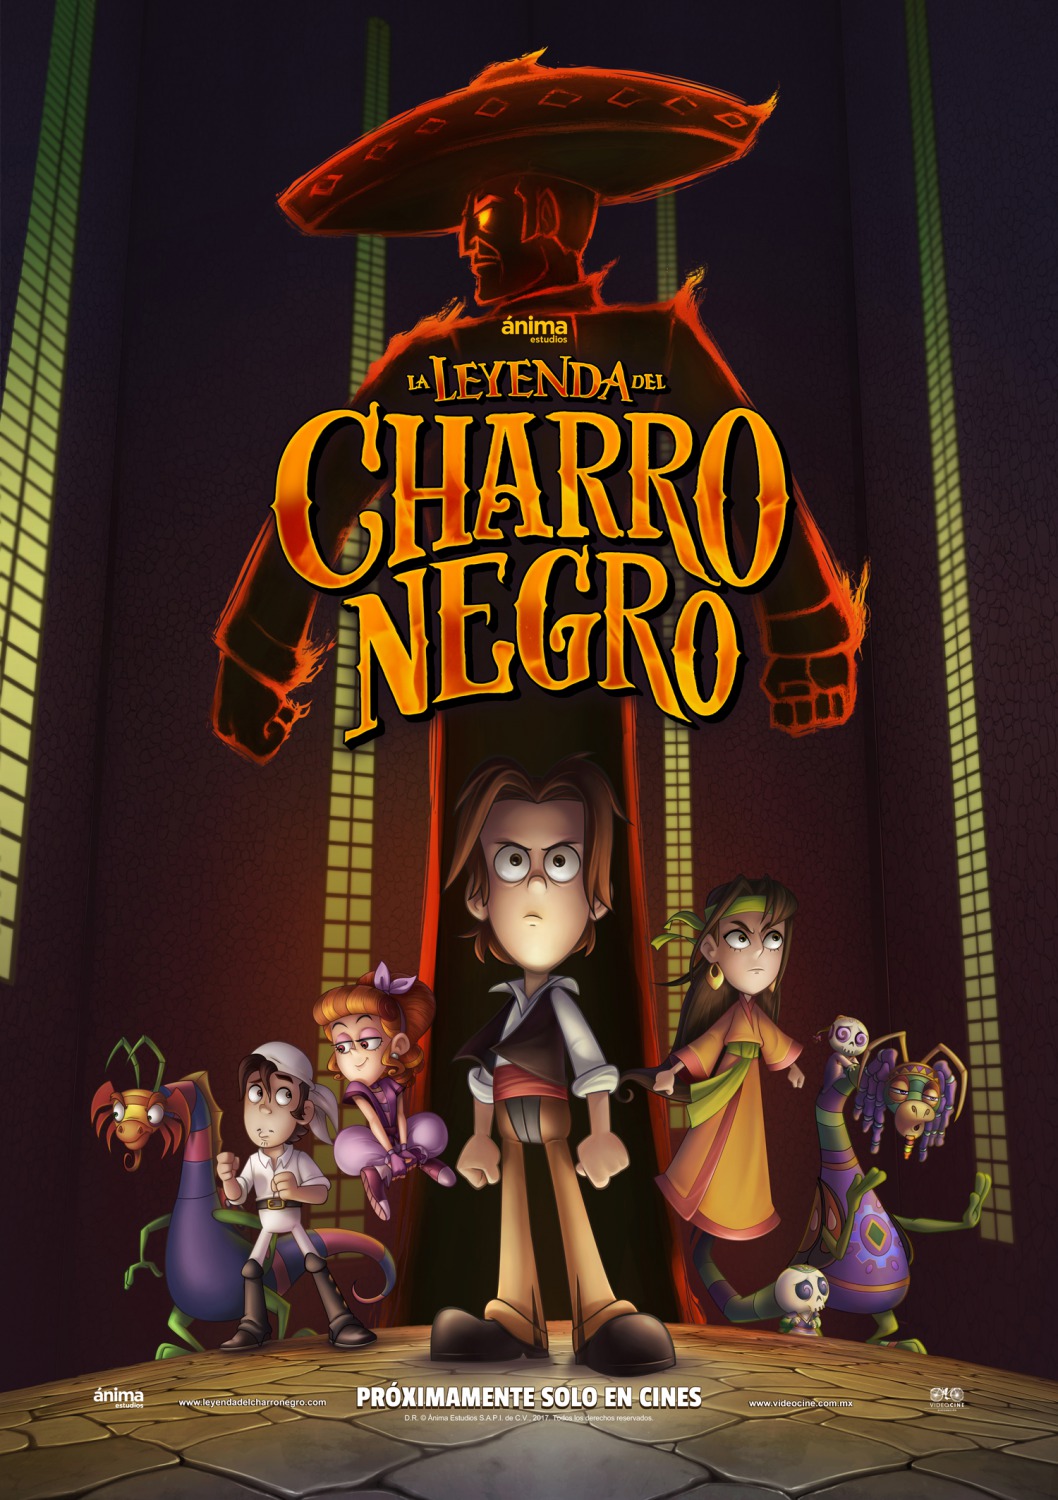 Extra Large Movie Poster Image for La Leyenda del Charro Negro (#2 of 2)